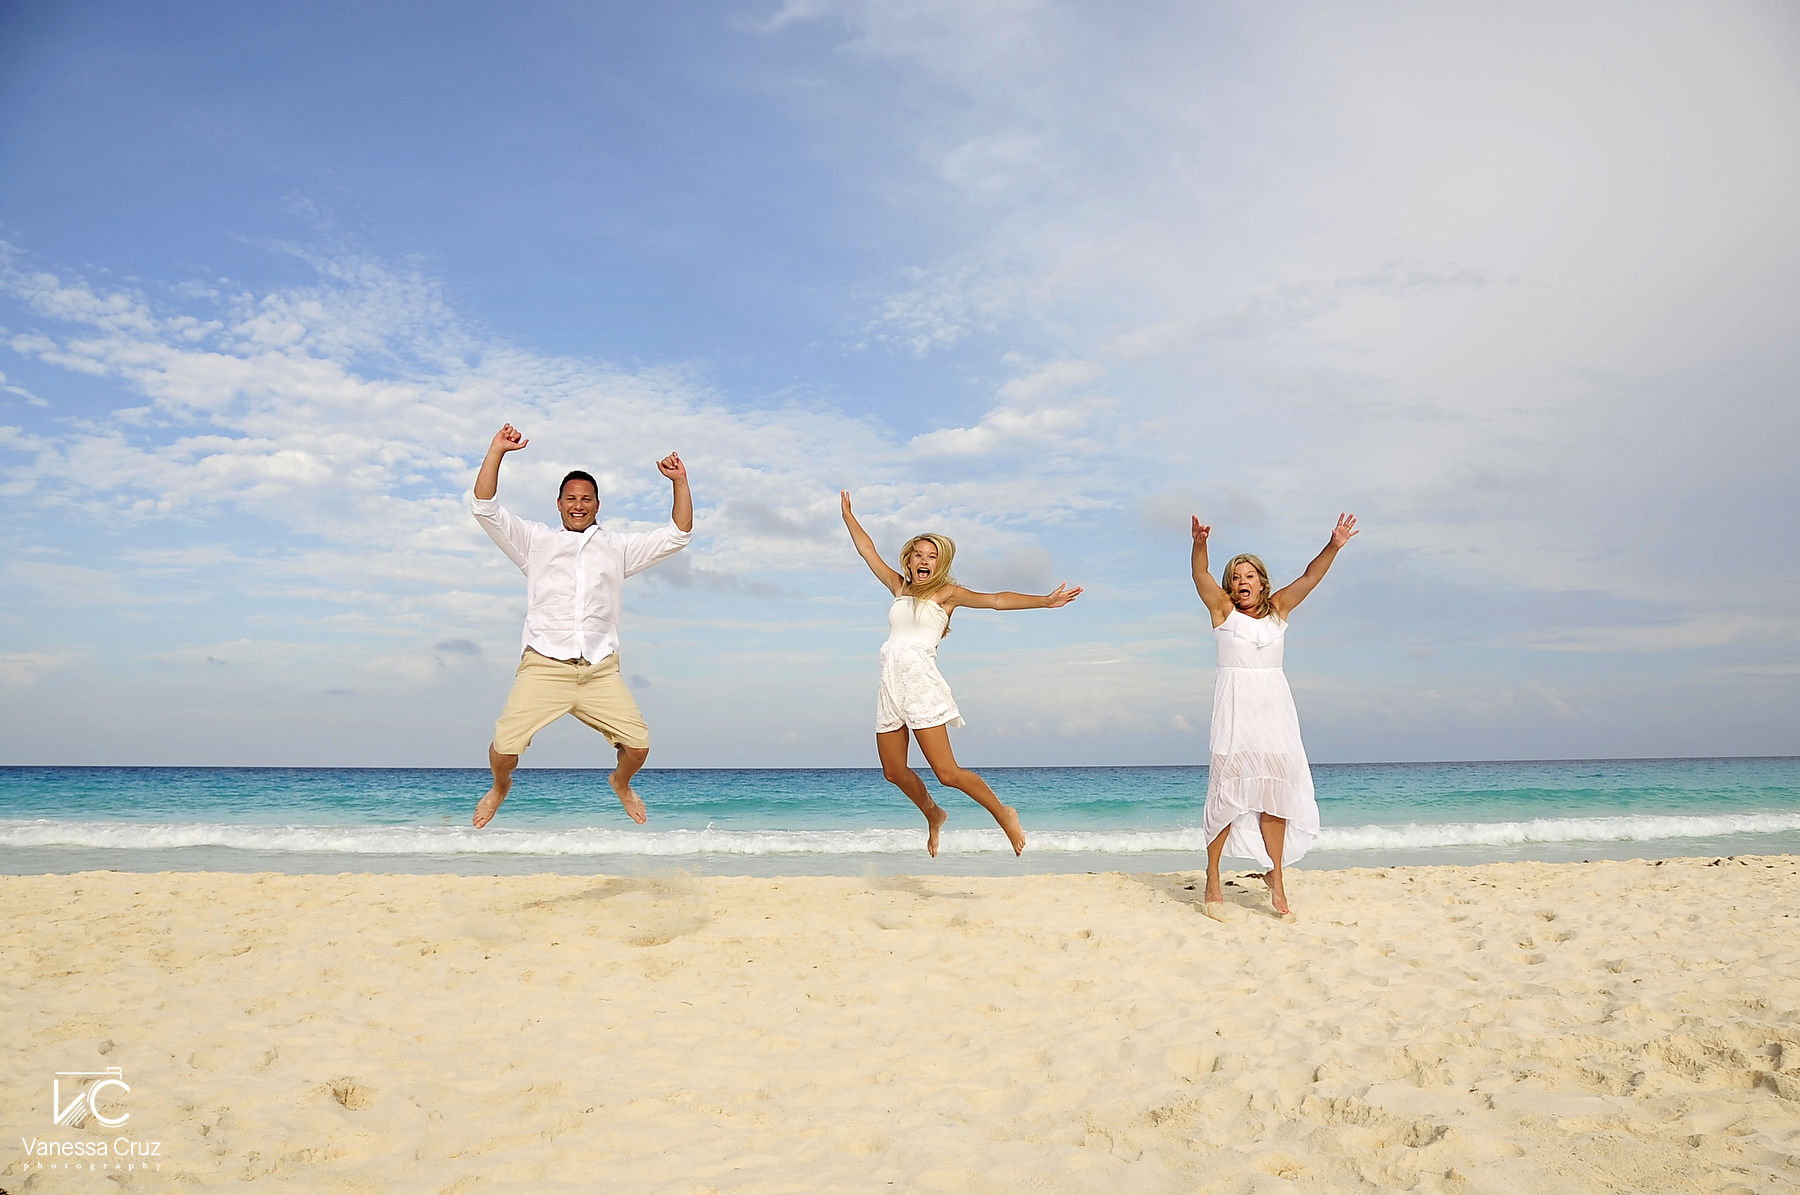 Jumping on beach family fun portraits Cancun Mexico